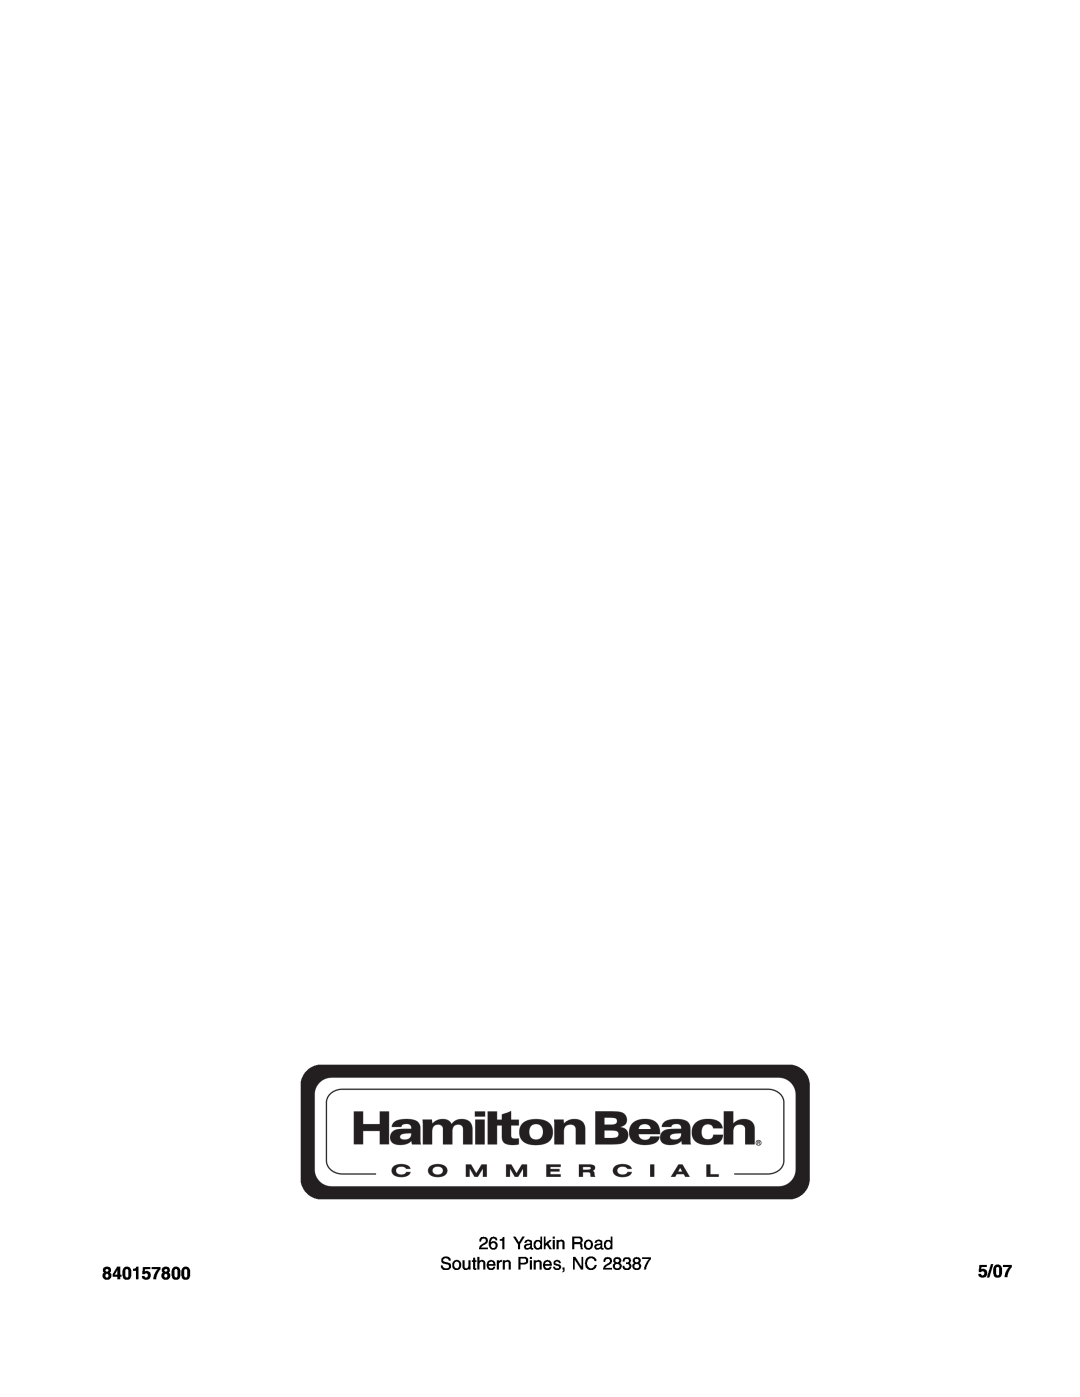 Hamilton Beach Immersion Mixer operation manual Yadkin Road, 840157800, Southern Pines, NC, 5/07 